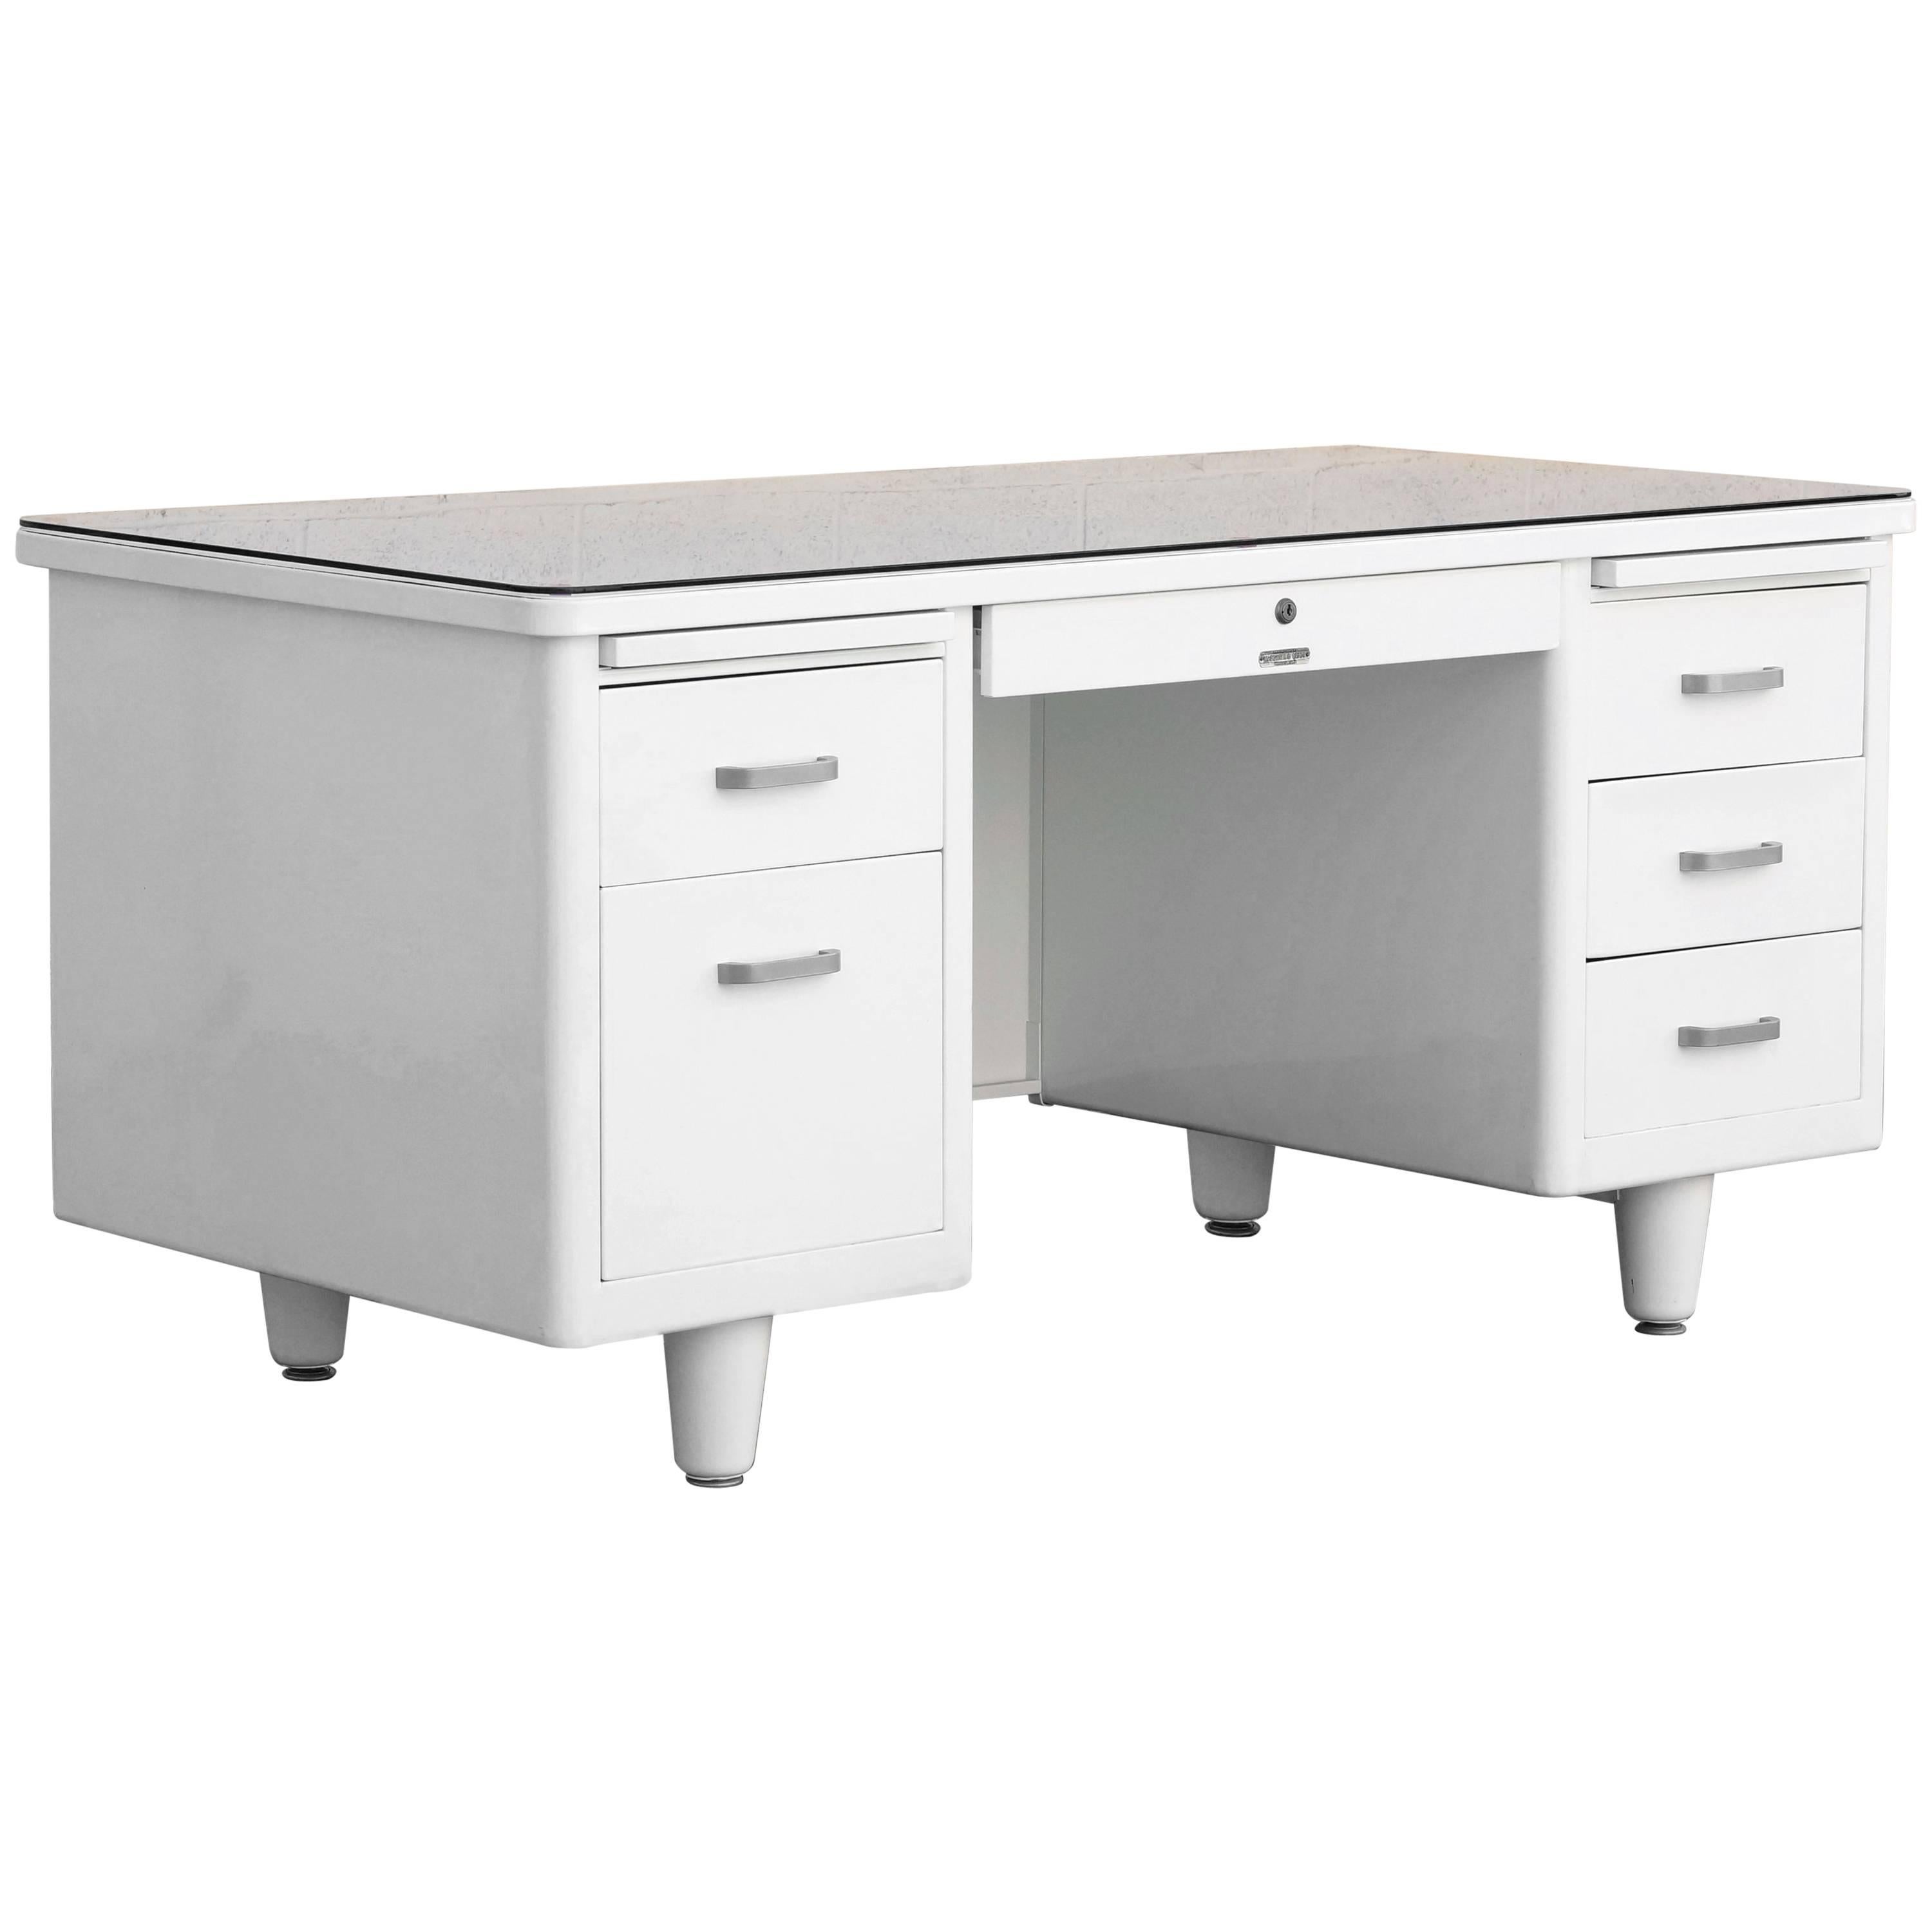 Classic McDowell Craig Tanker Desk Refinished in White, Custom Order For Sale